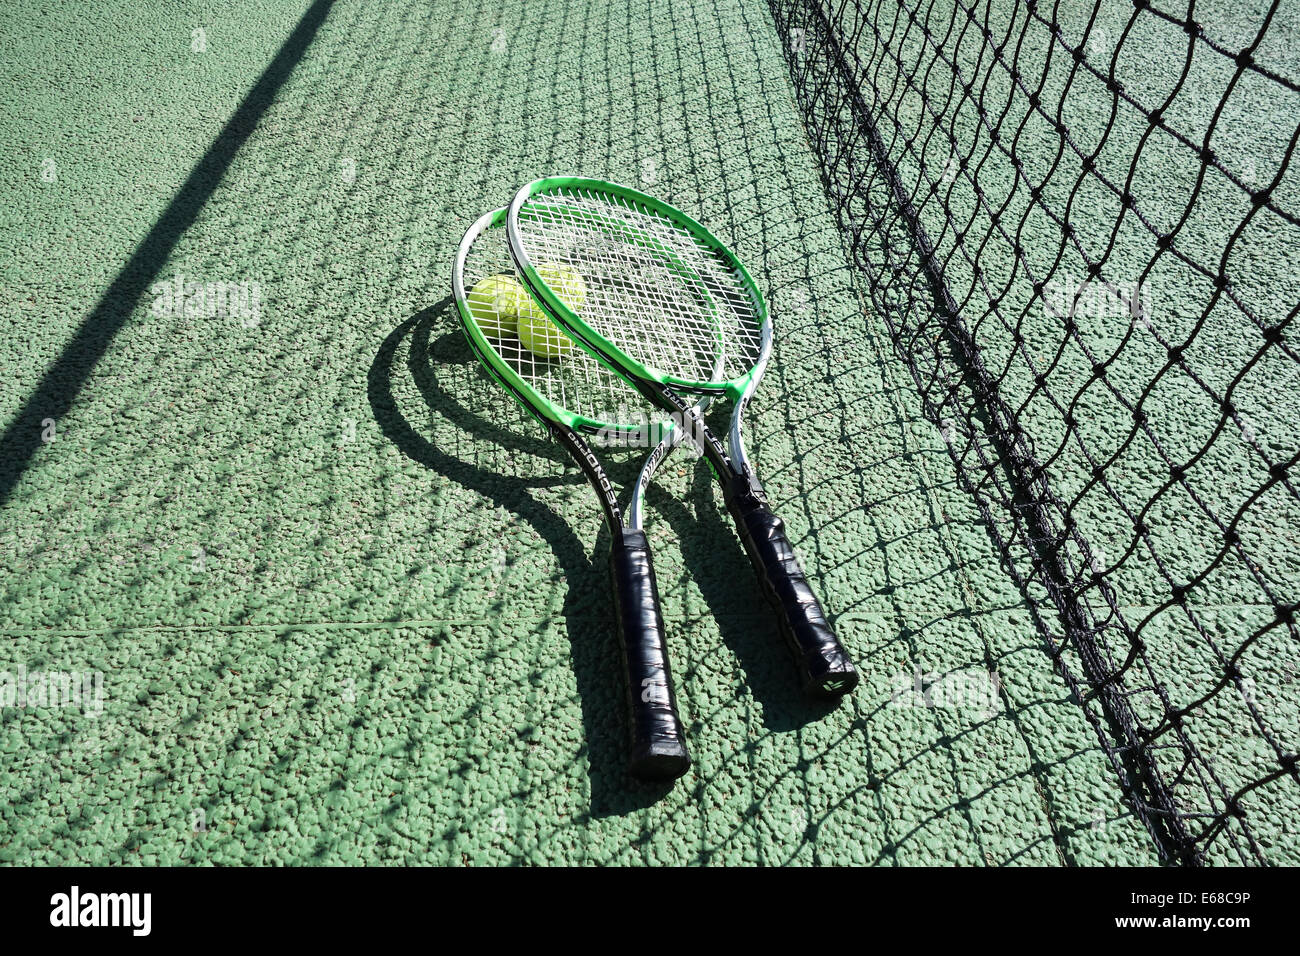 Tennis, tennis rackets and balls on a tennis court showing net. Tennis Stock Photo